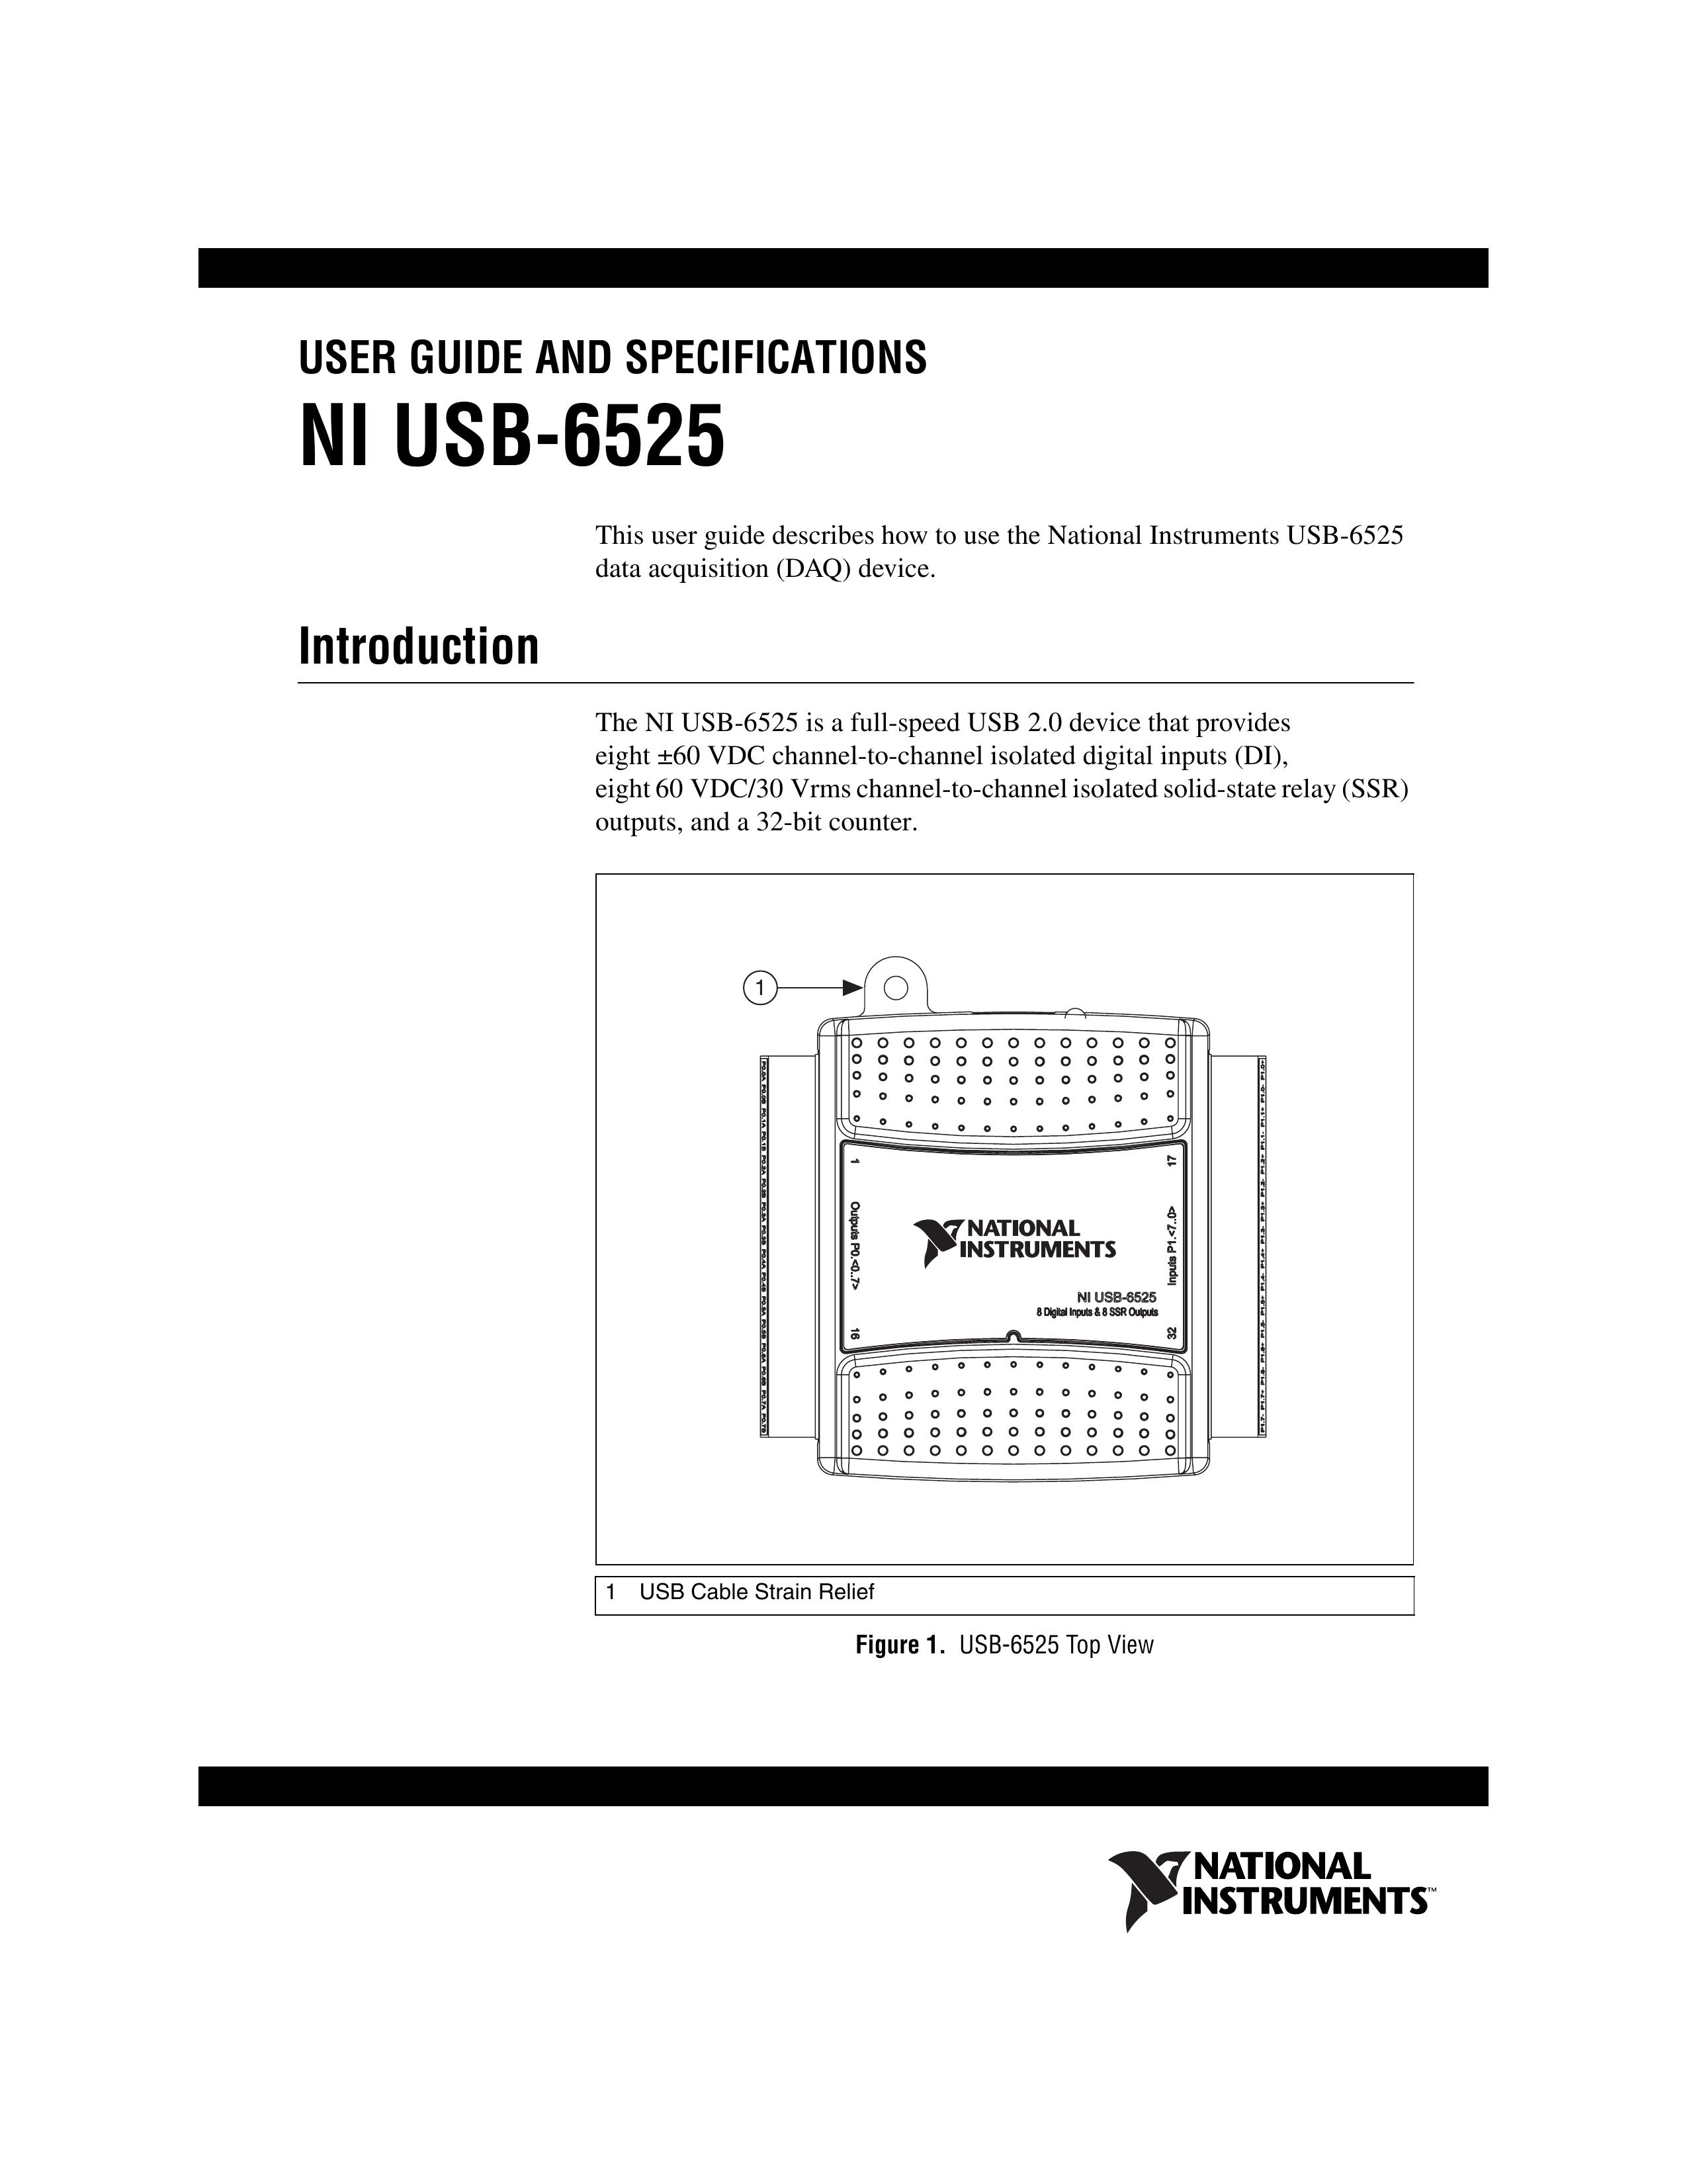 National Instruments USB-6525 data aquisition (DAQ) device Marine RADAR User Manual